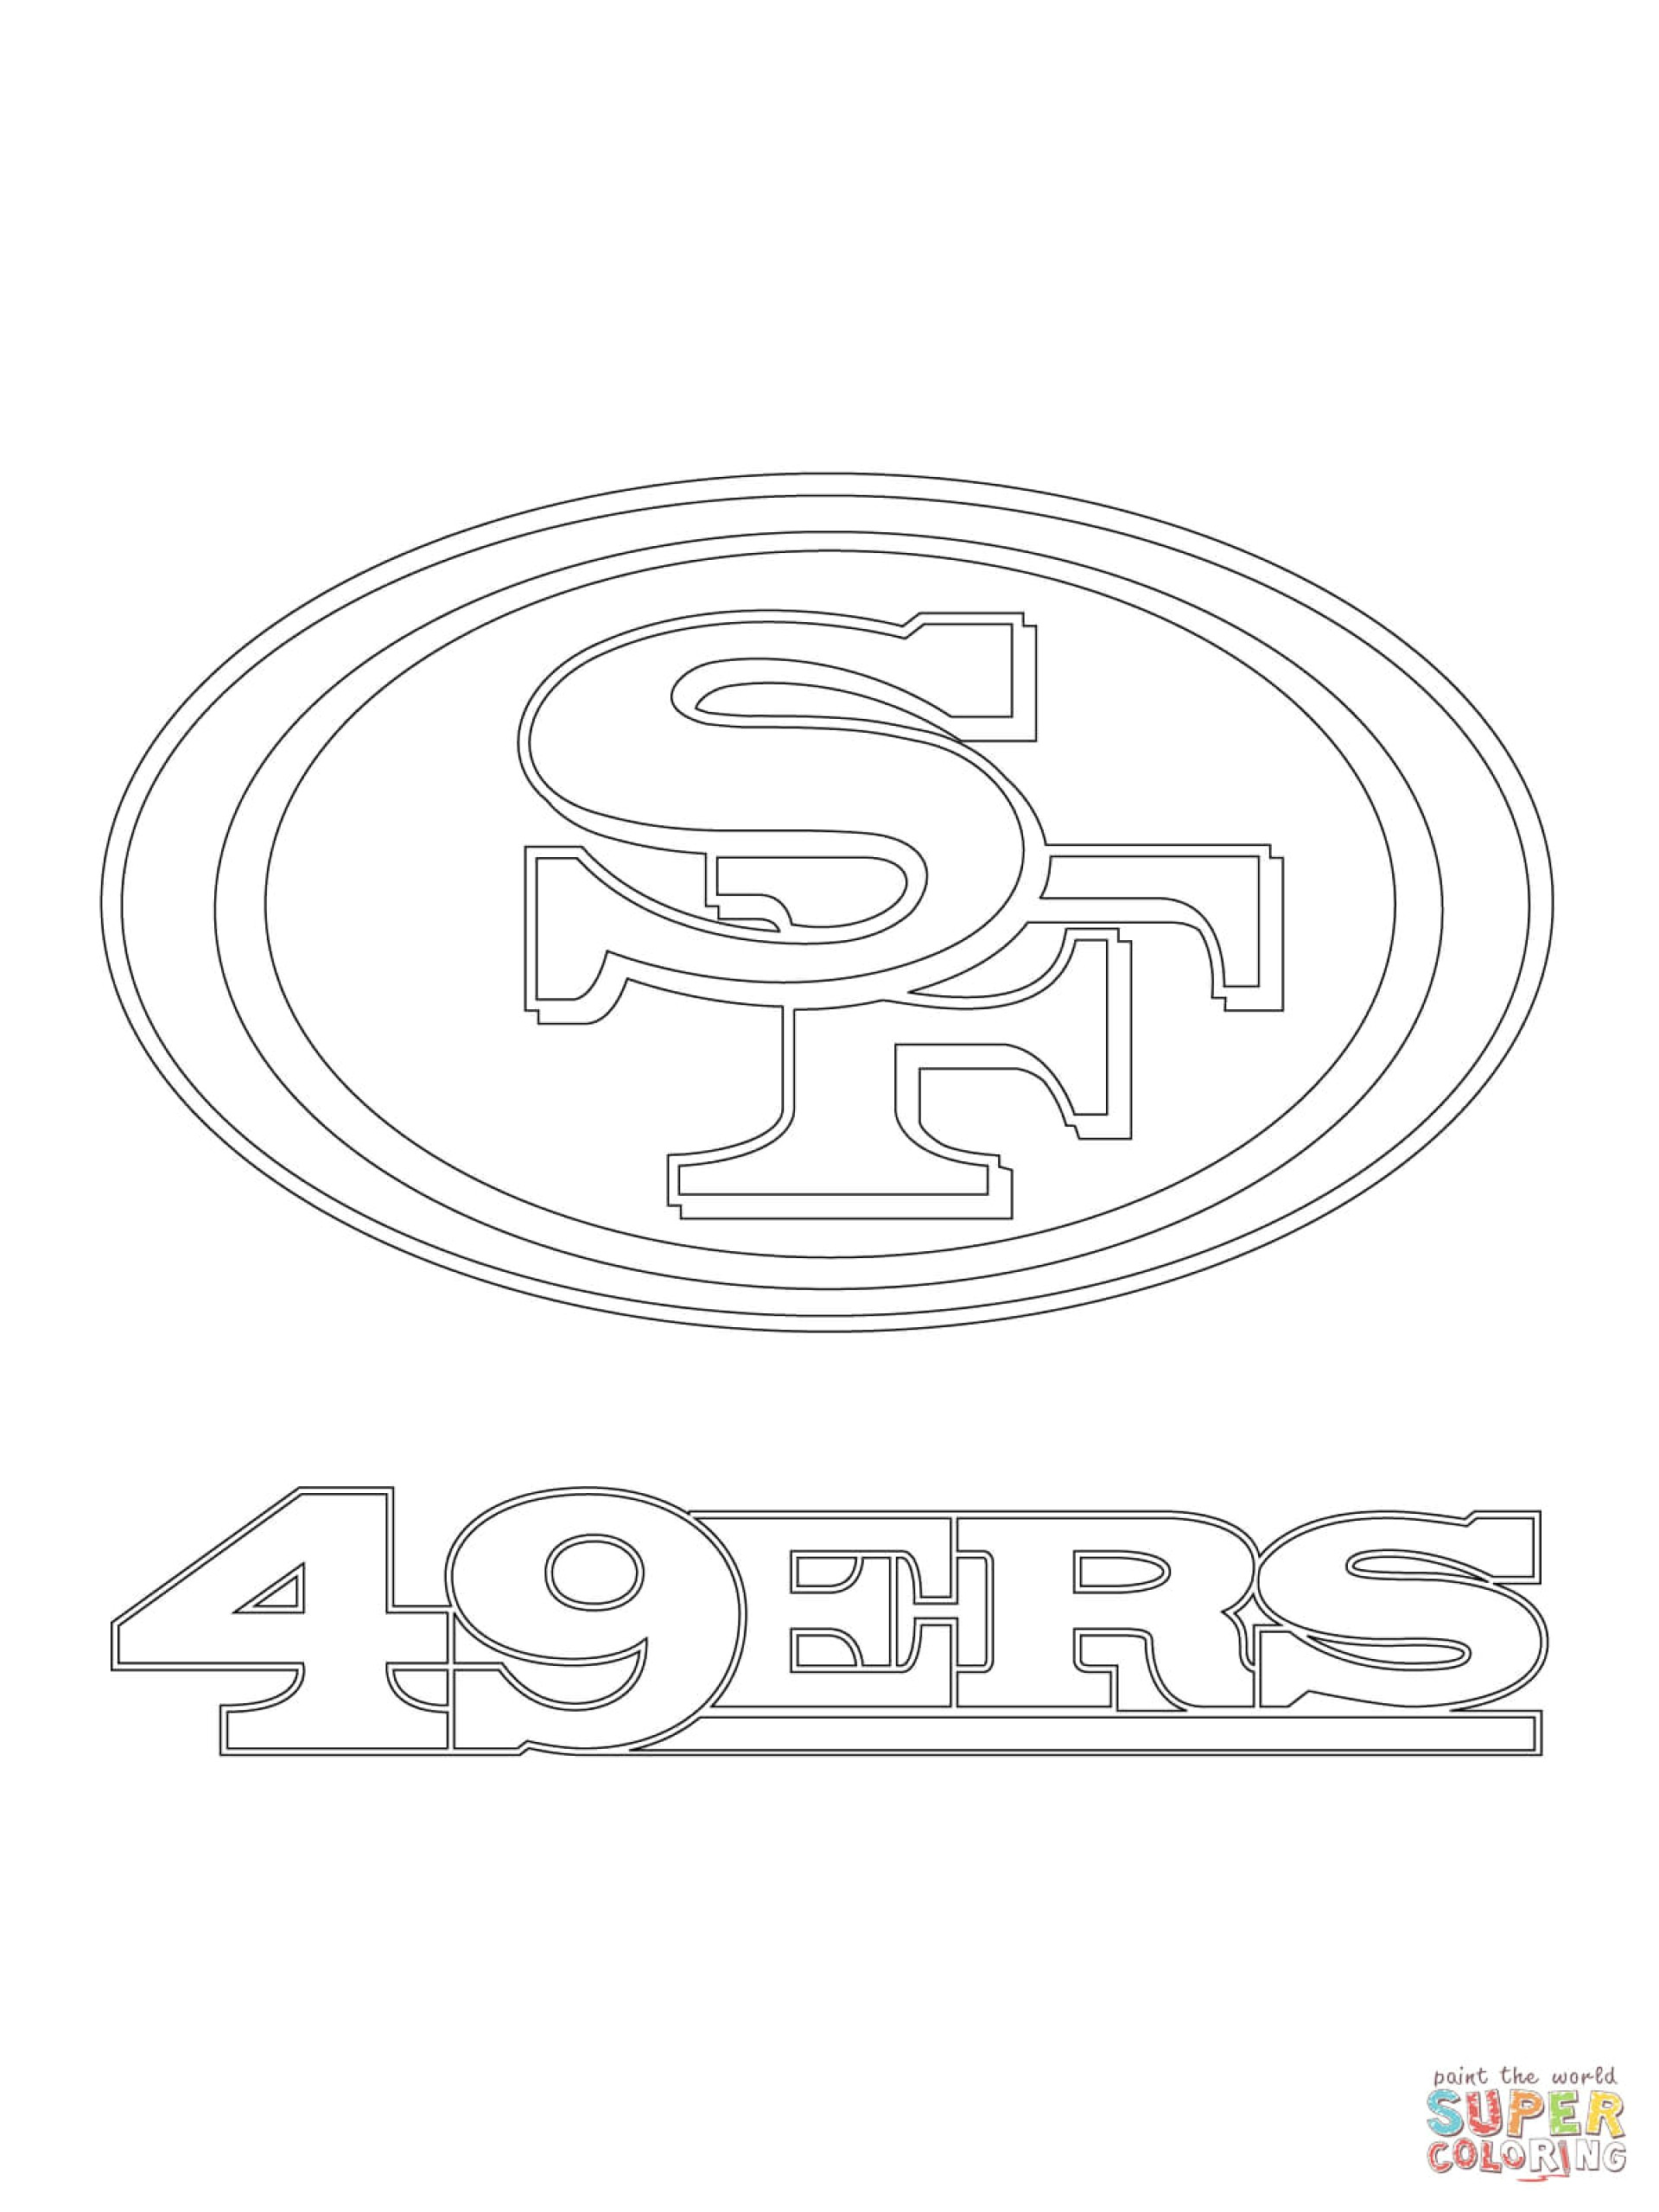 Drawing 49ers Logo 012 Malbuch 49ers Potentialplayers